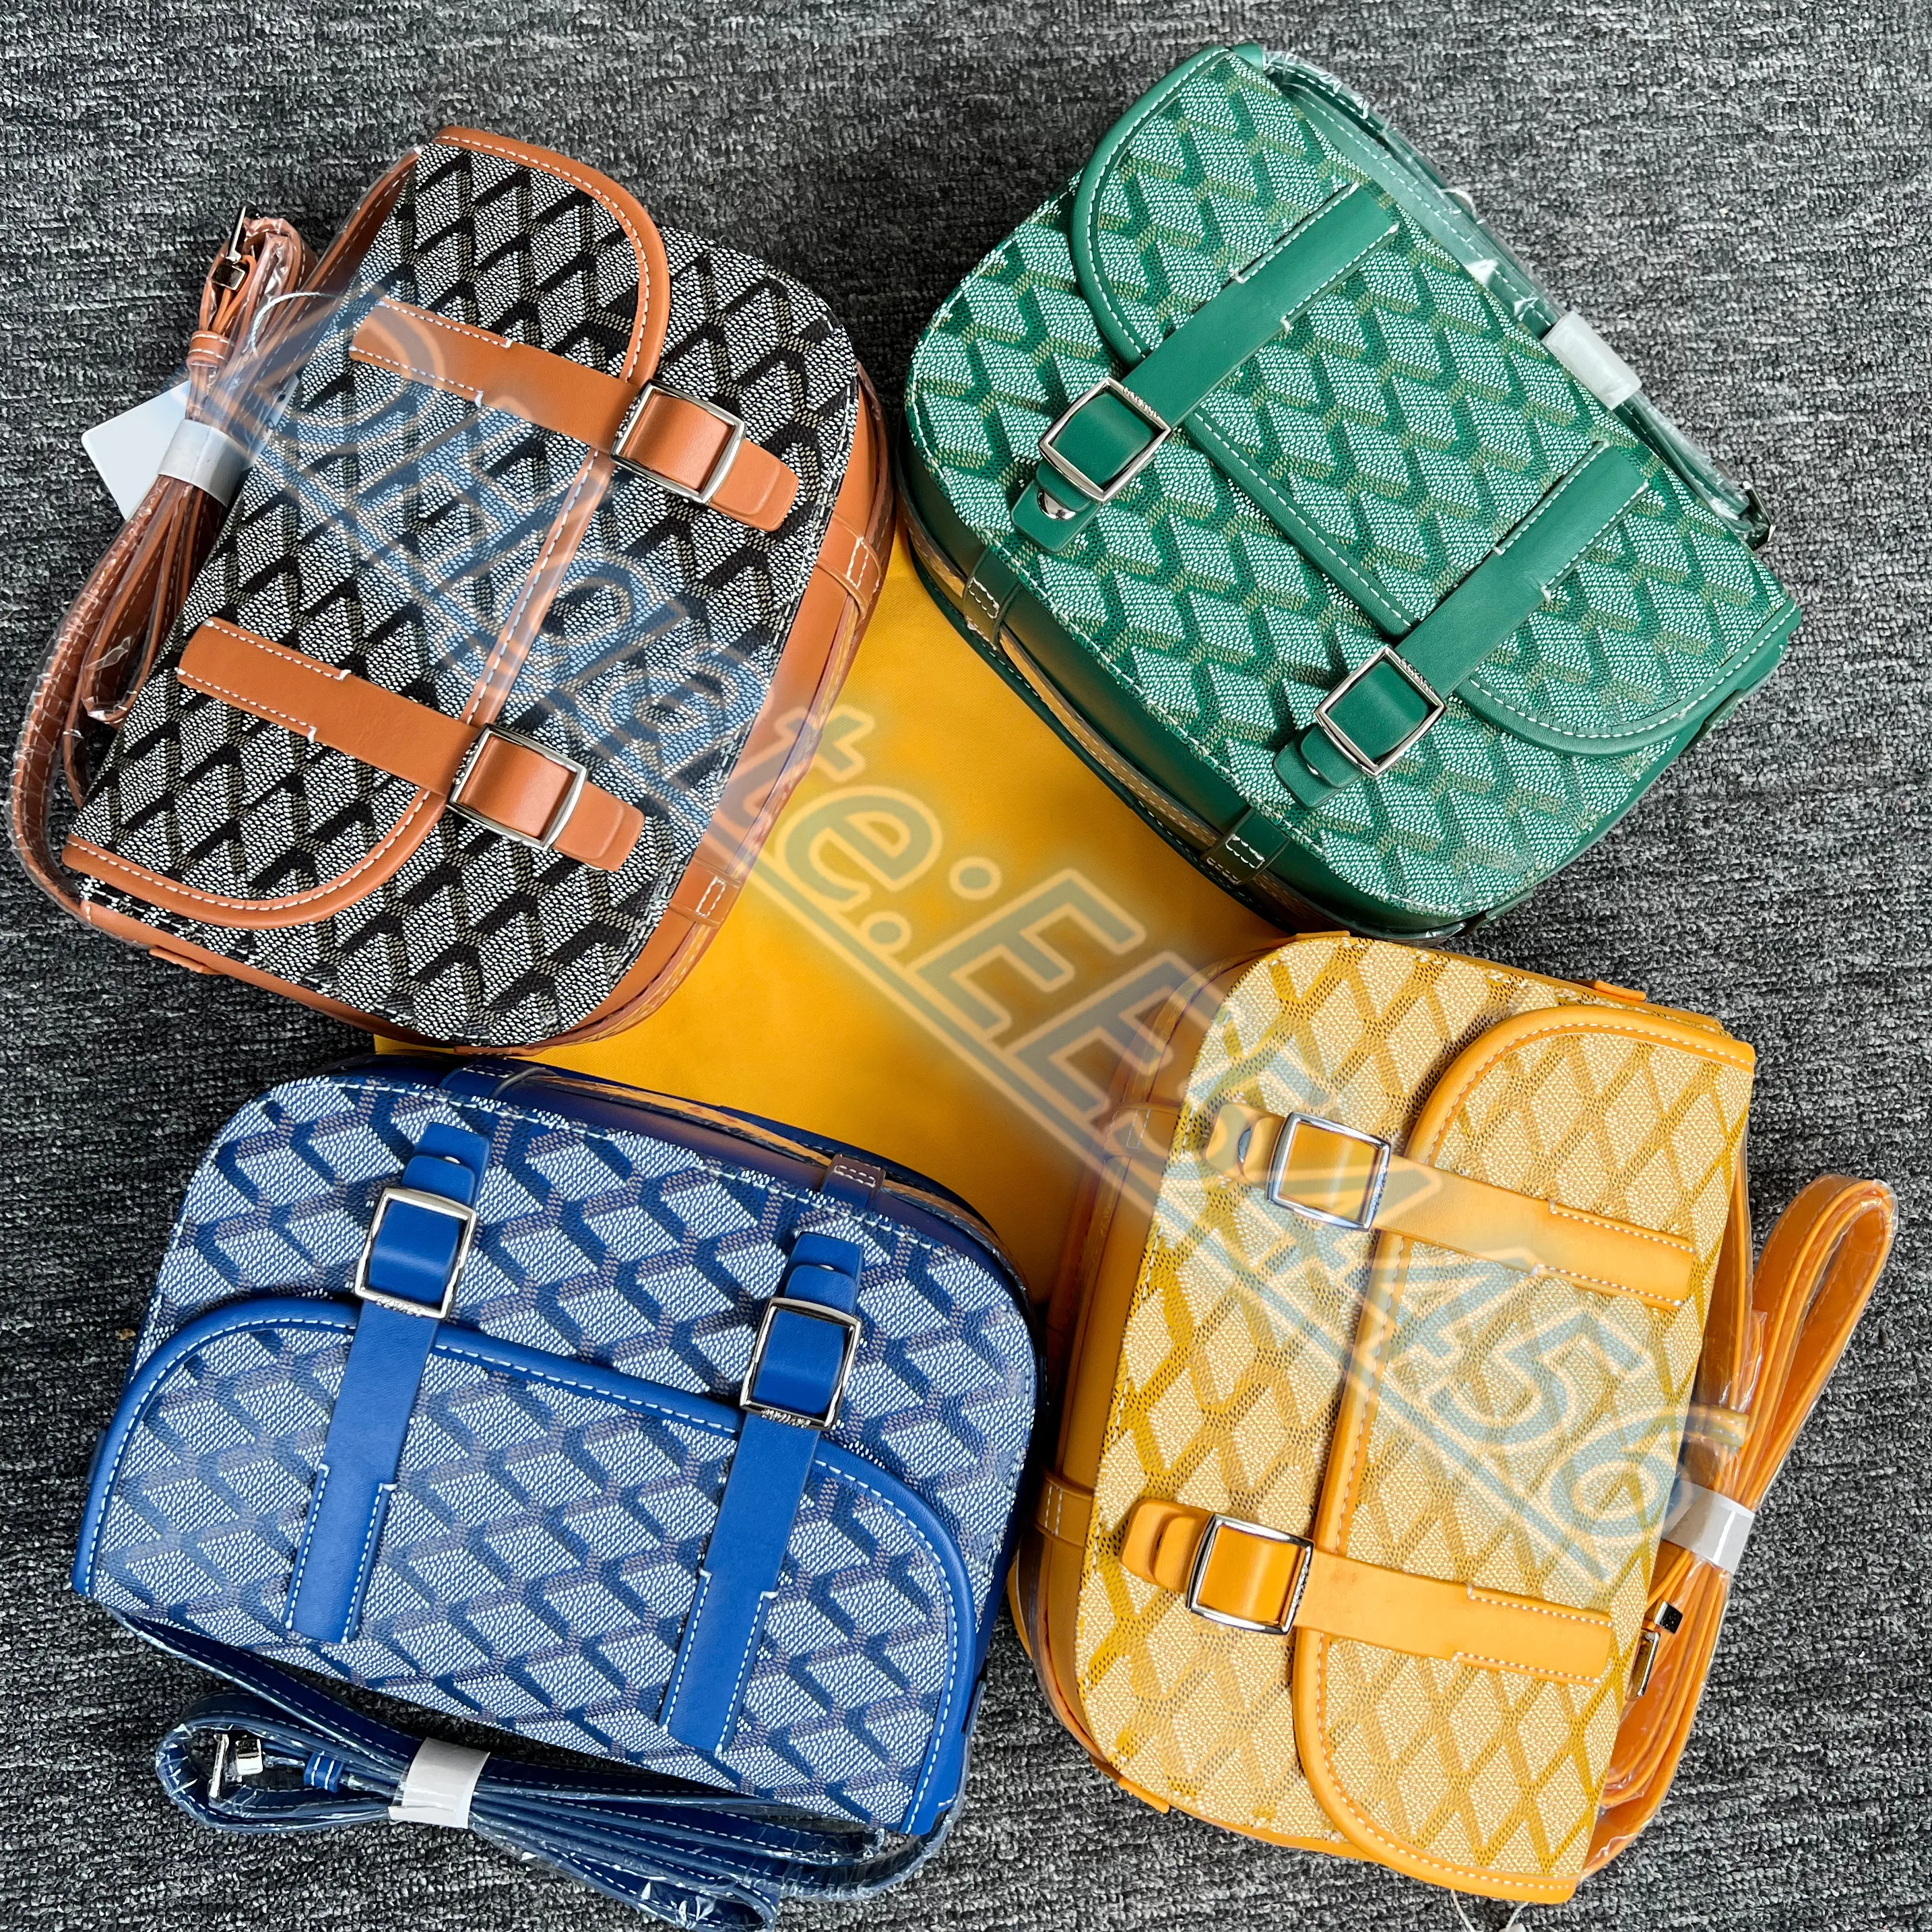 Designer Luxury messenger postman Bags Wallets envelope man Hand Painted fashion CrossBody tote handbags womens men pochette vintage clutch leather Shoulder Bag